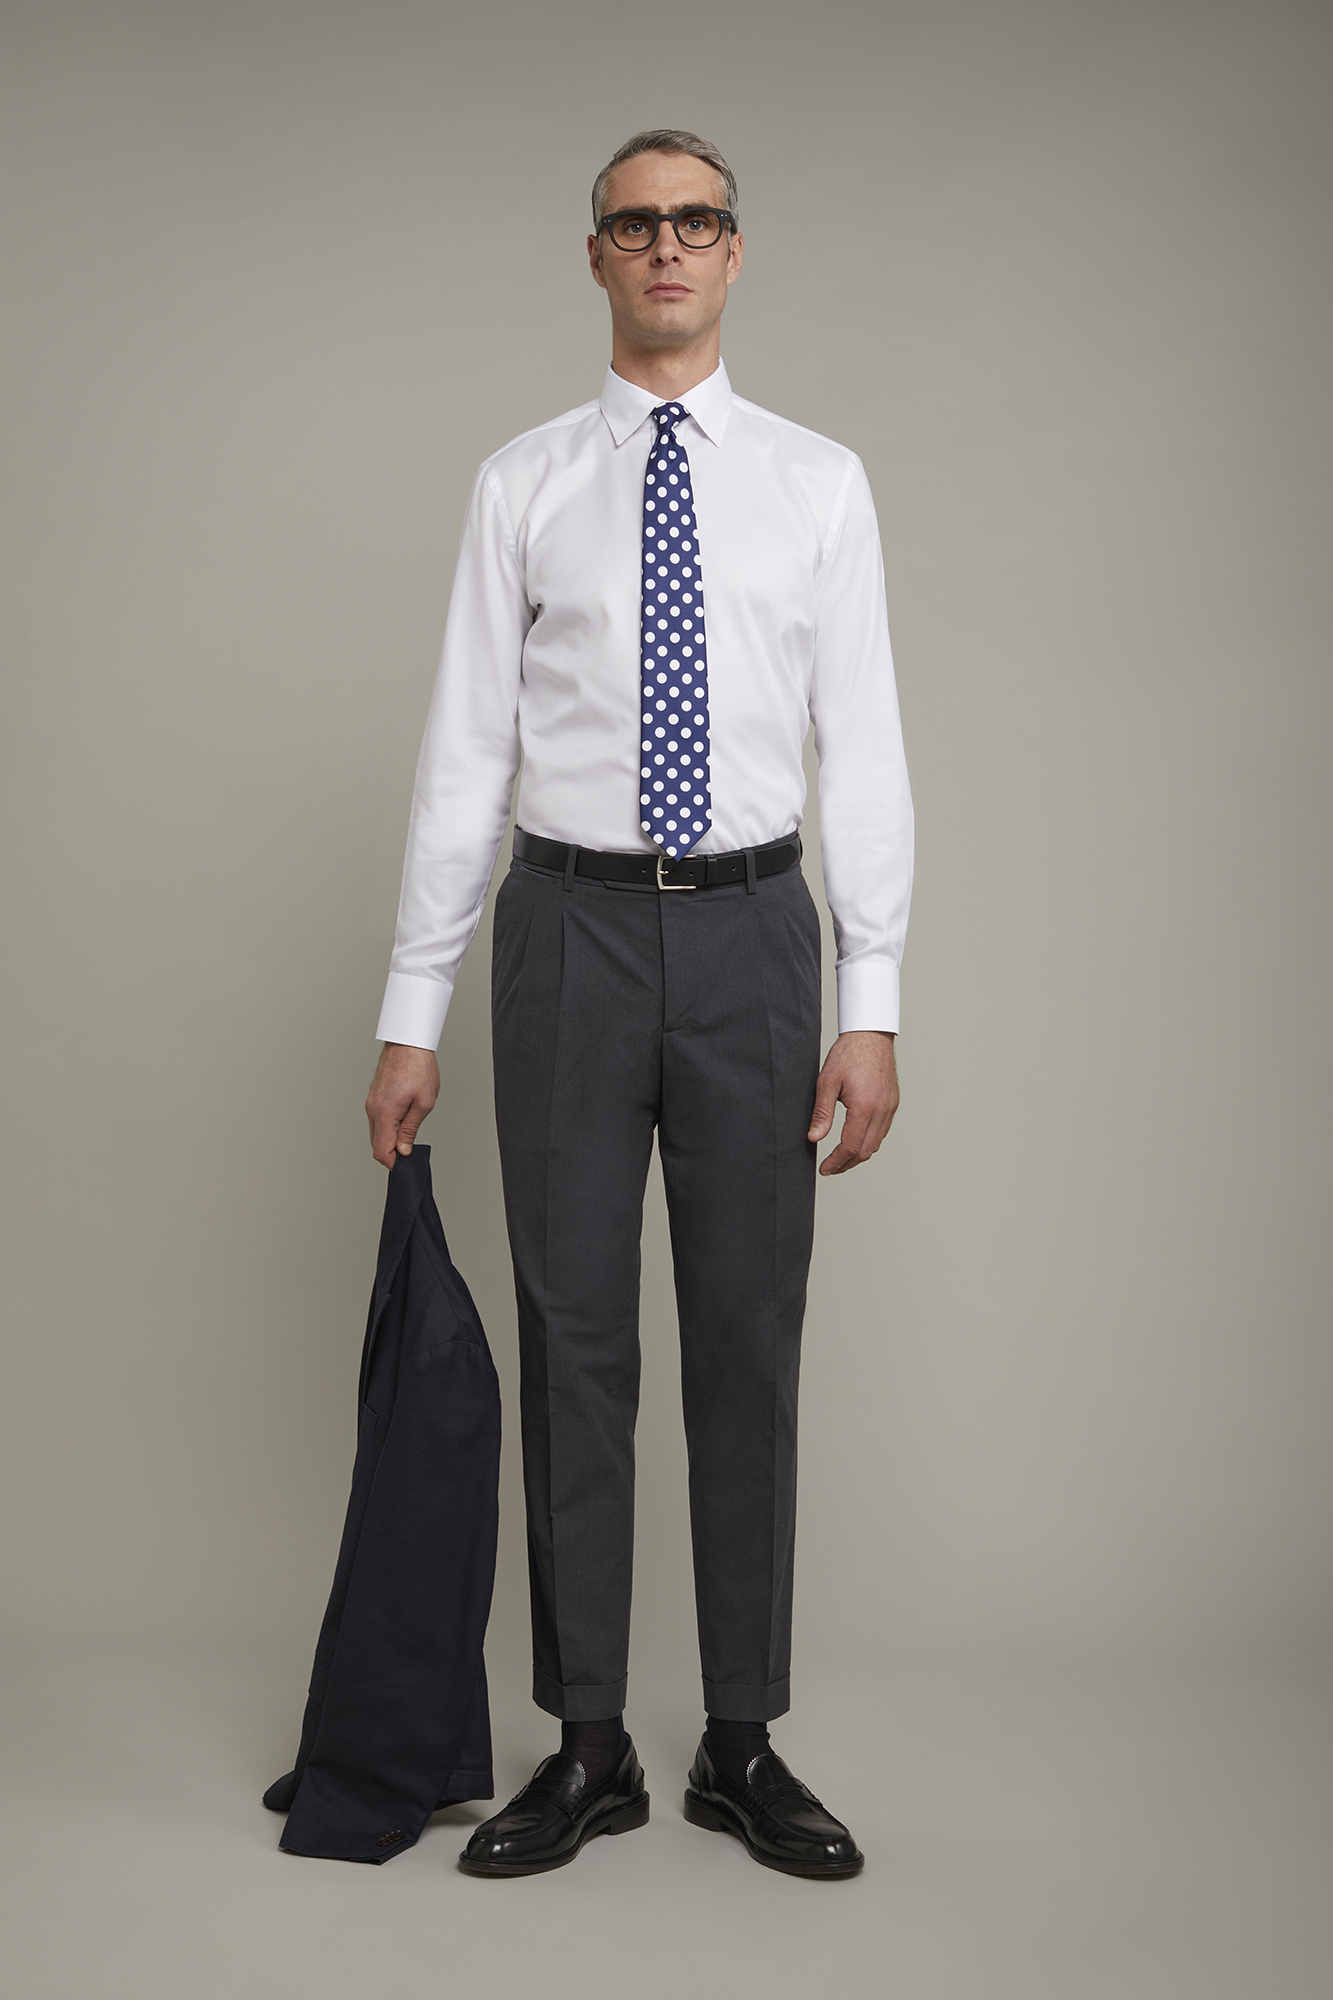 Men's shirt classic collar 100% cotton lightweight oxford fabric regular fit image number null